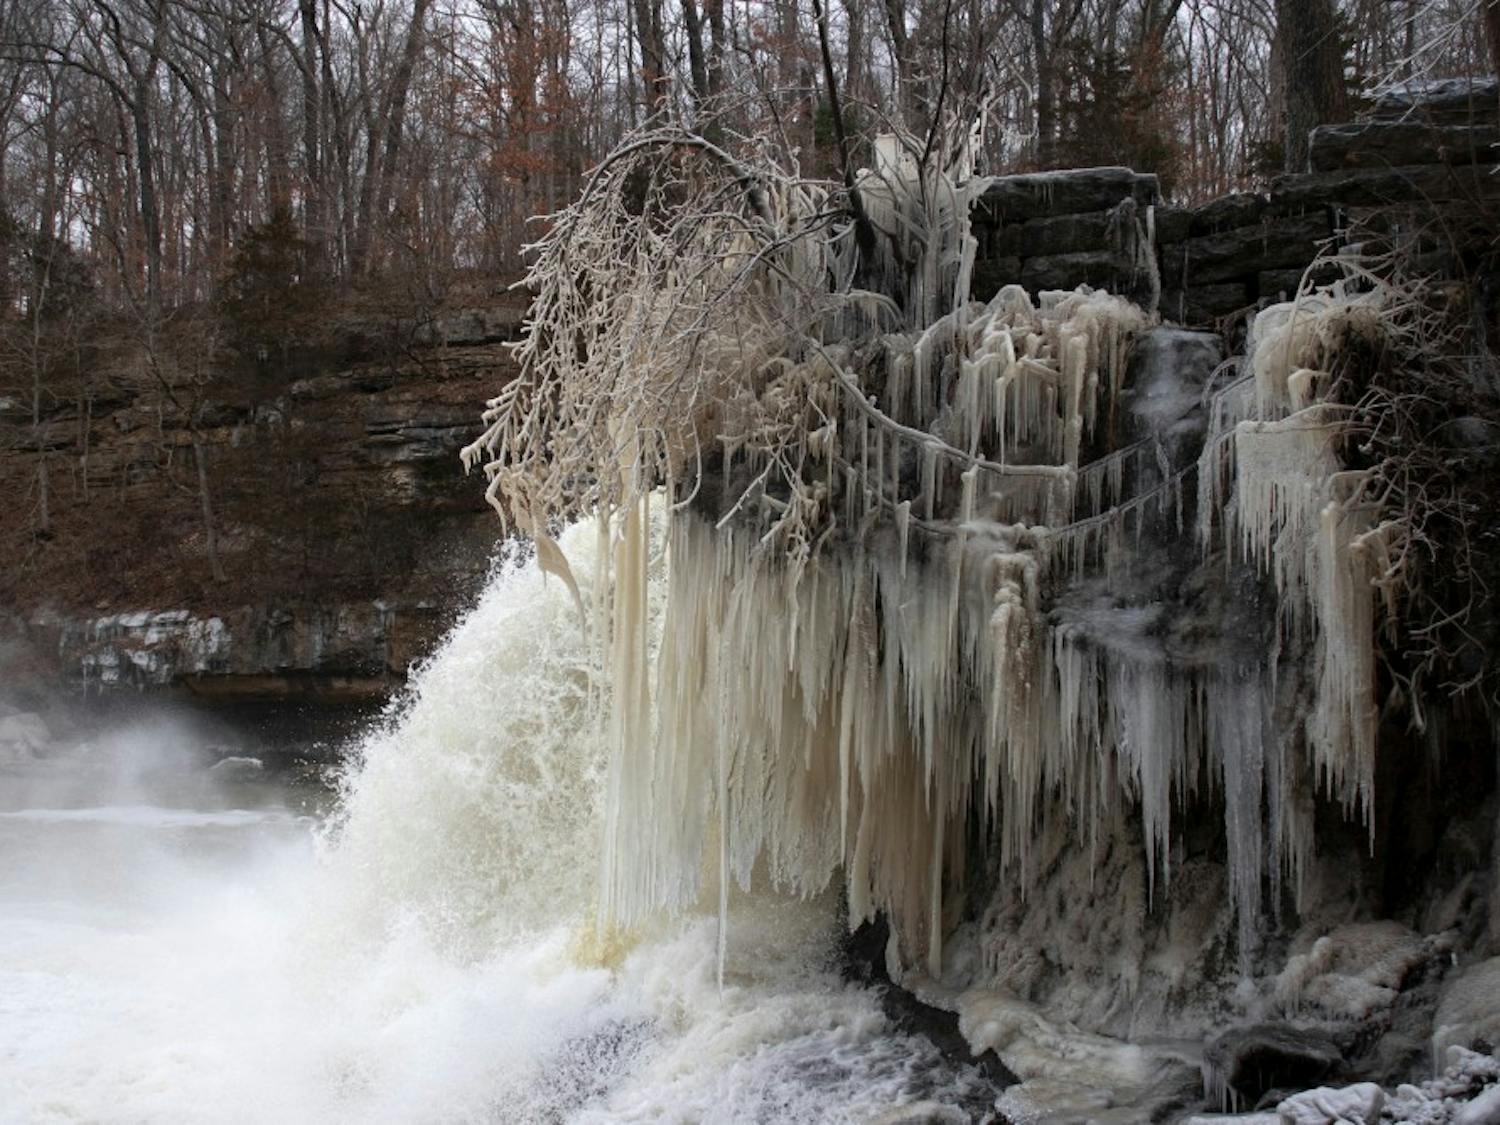 GALLERY: Cataract Falls is a frozen art exhibit